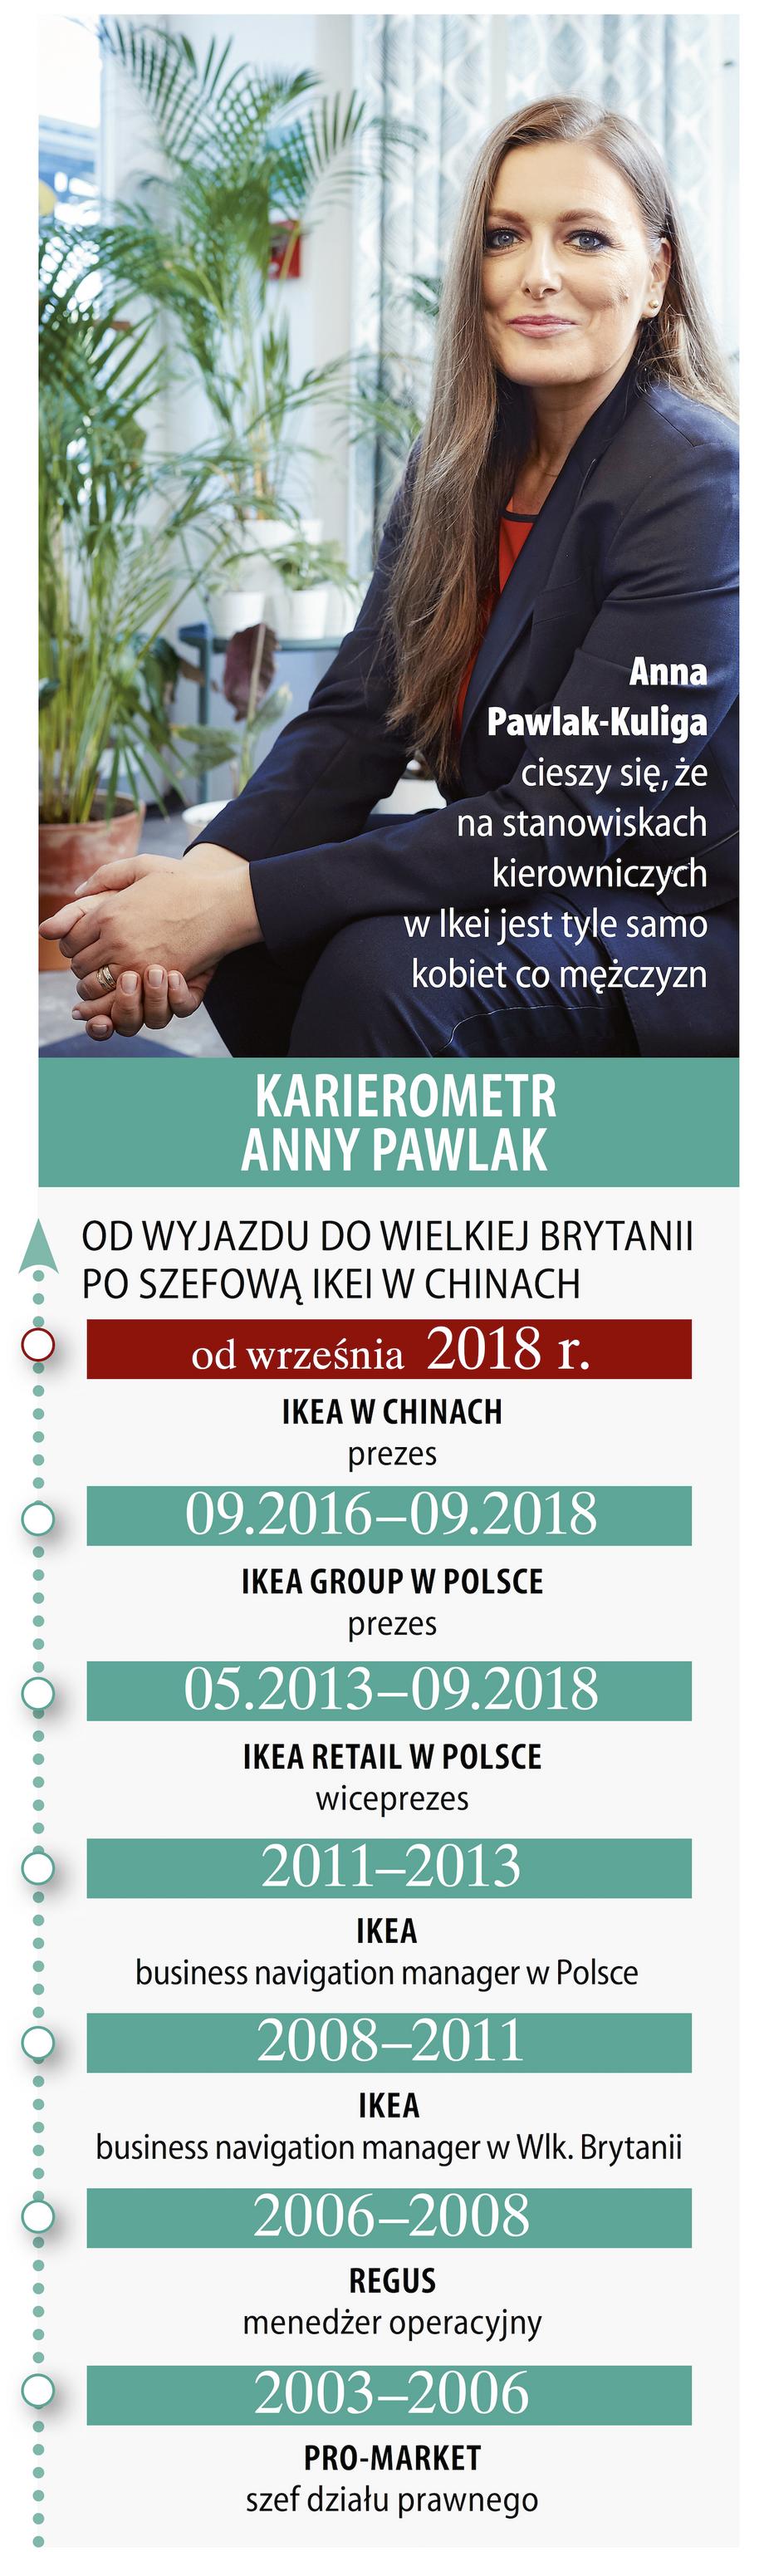 Anna Pawlak-Kuliga